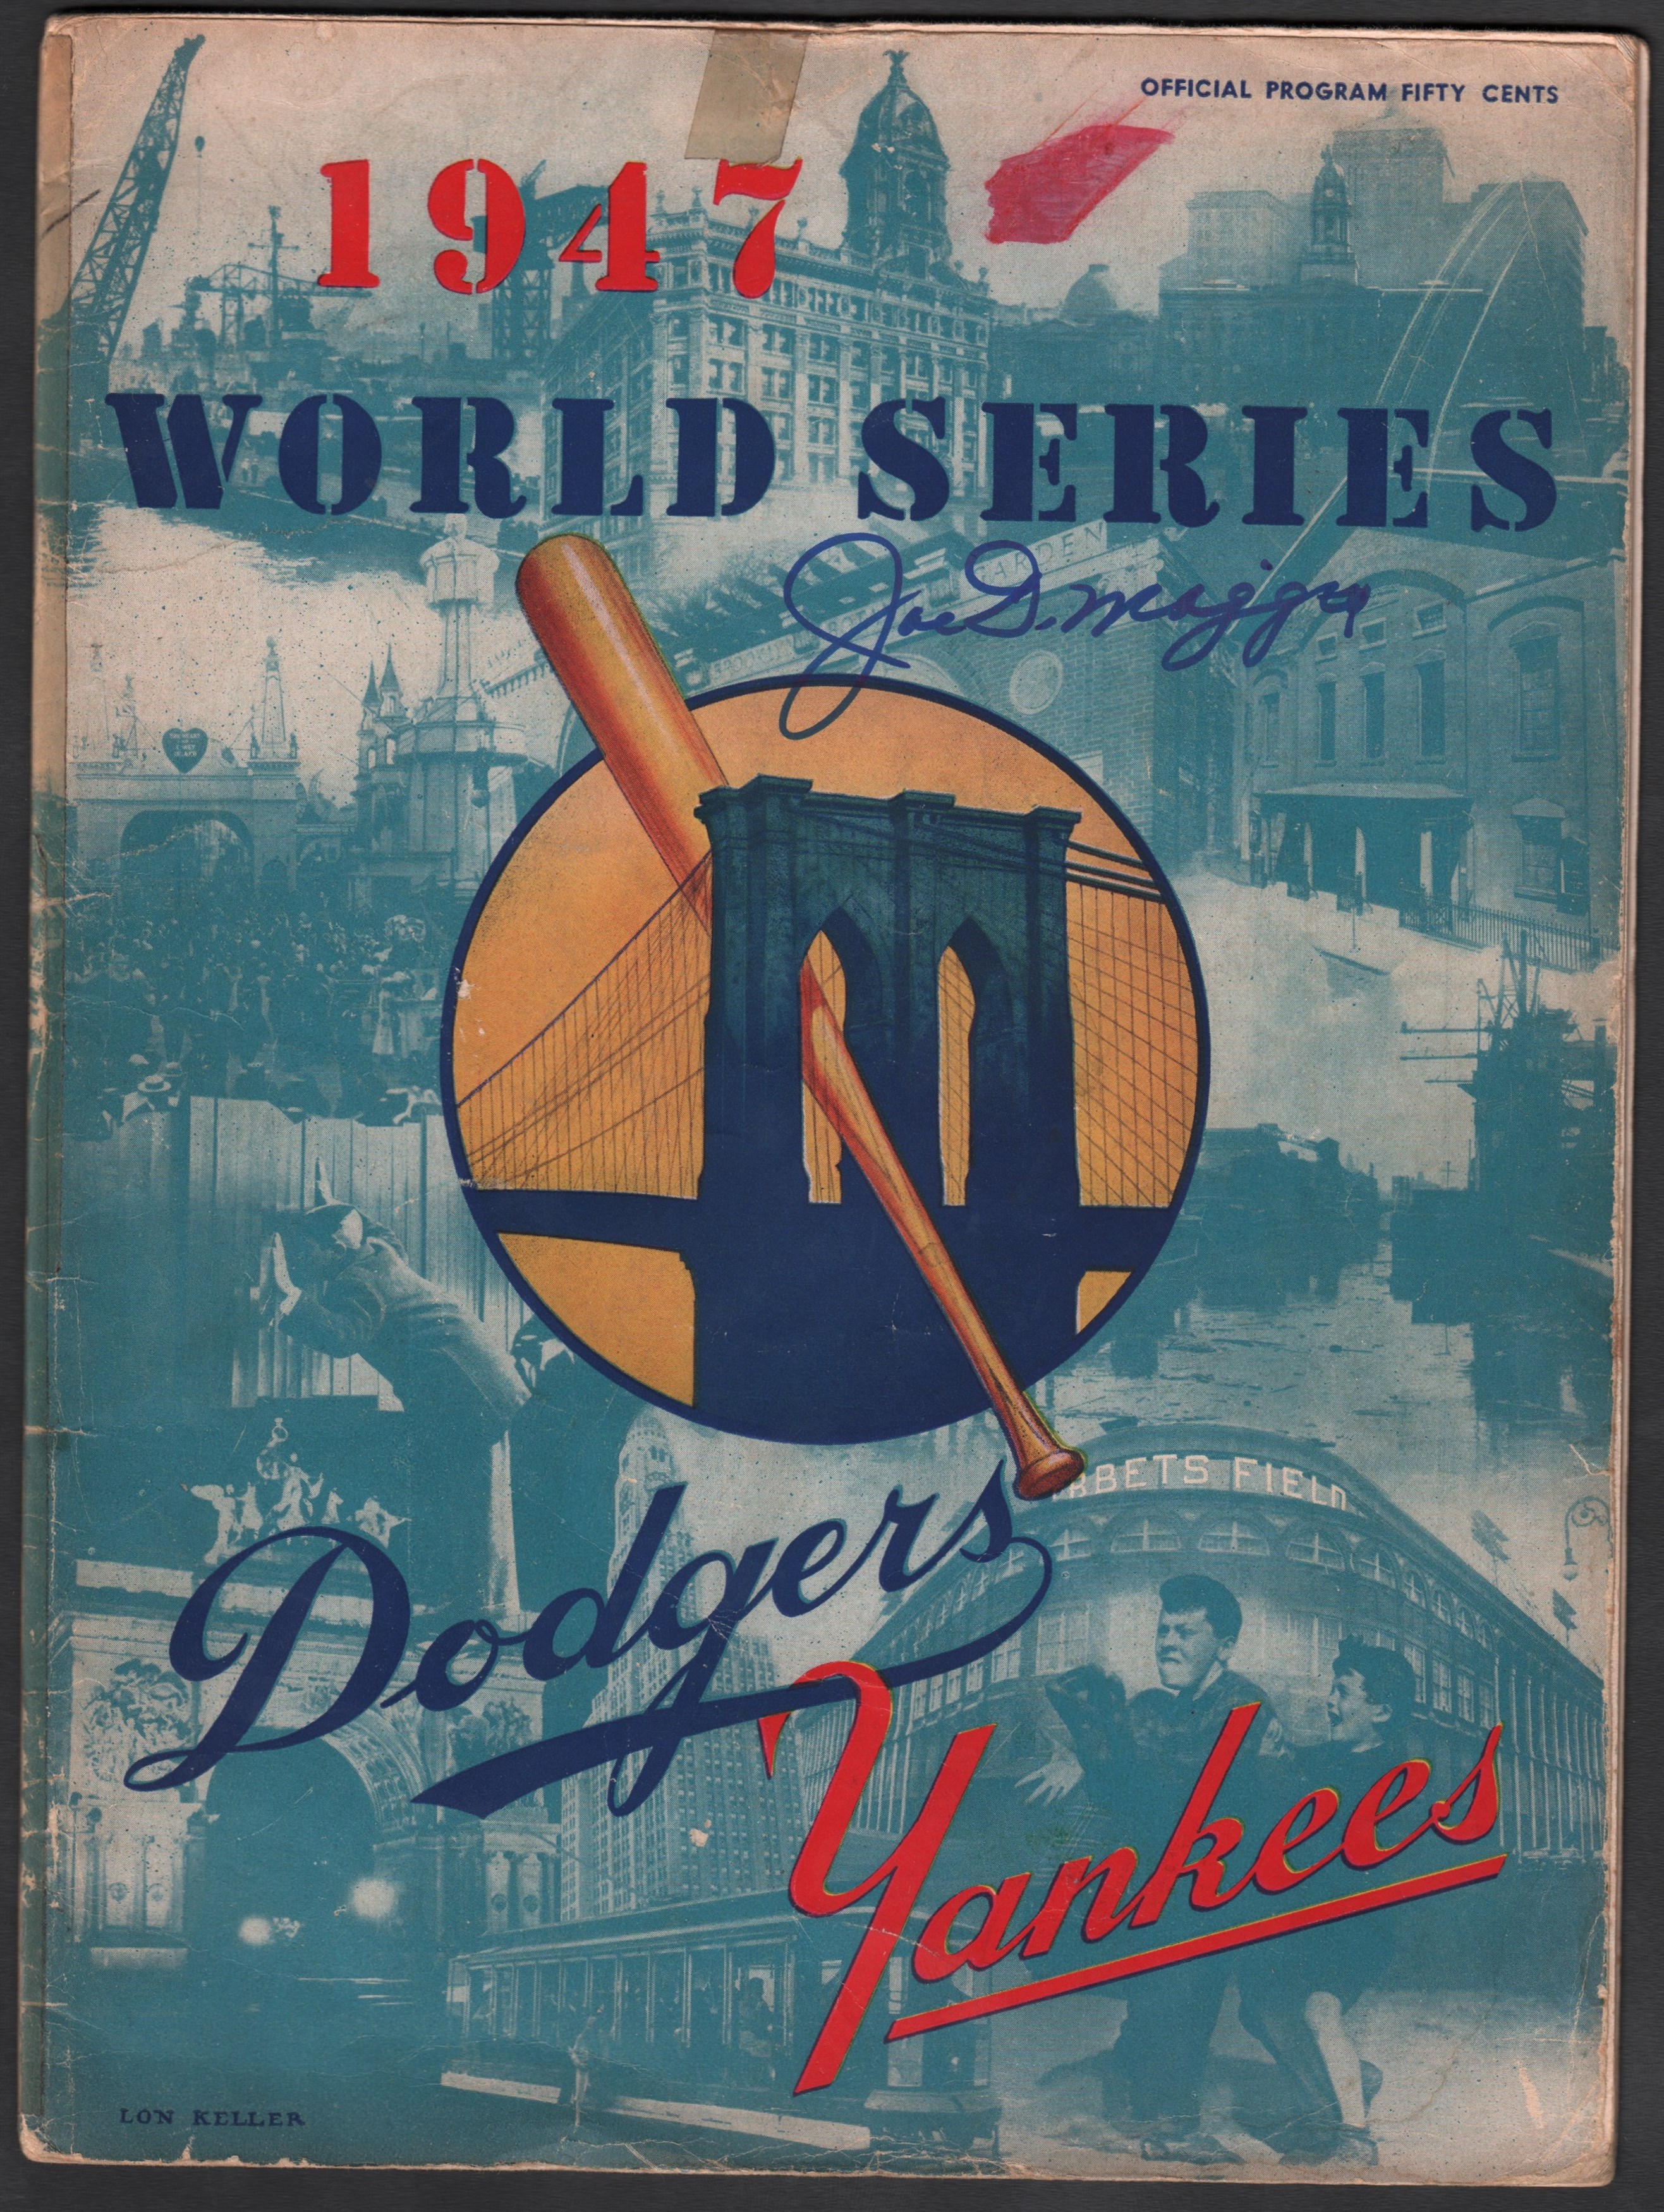 - Bill Bevens "No Hitter" Game 1947 World Series Program Signed by Joe DiMaggio